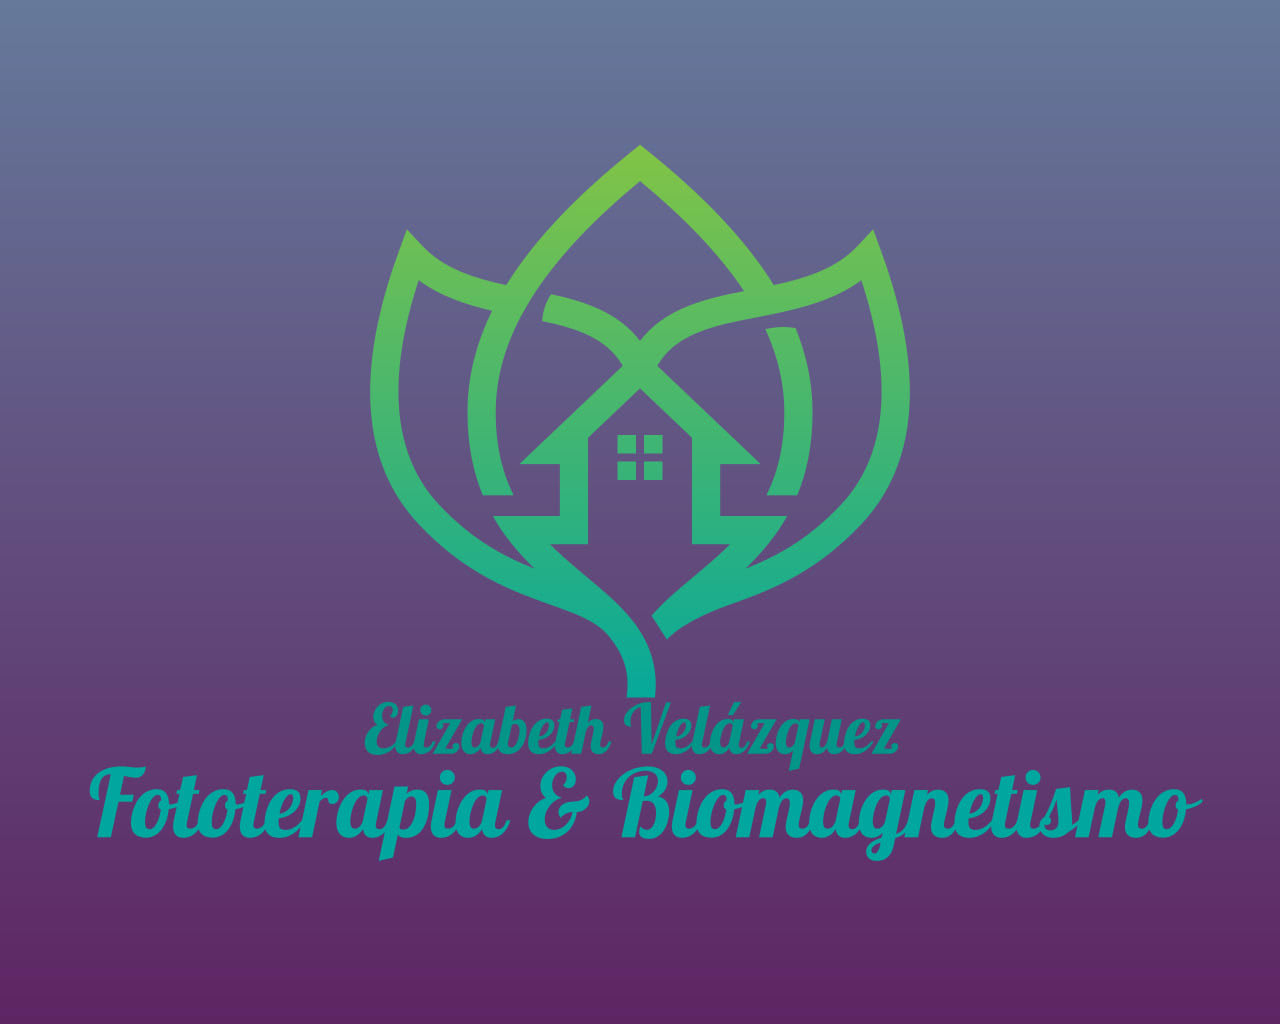 Fototerapia & Biomagnetismo